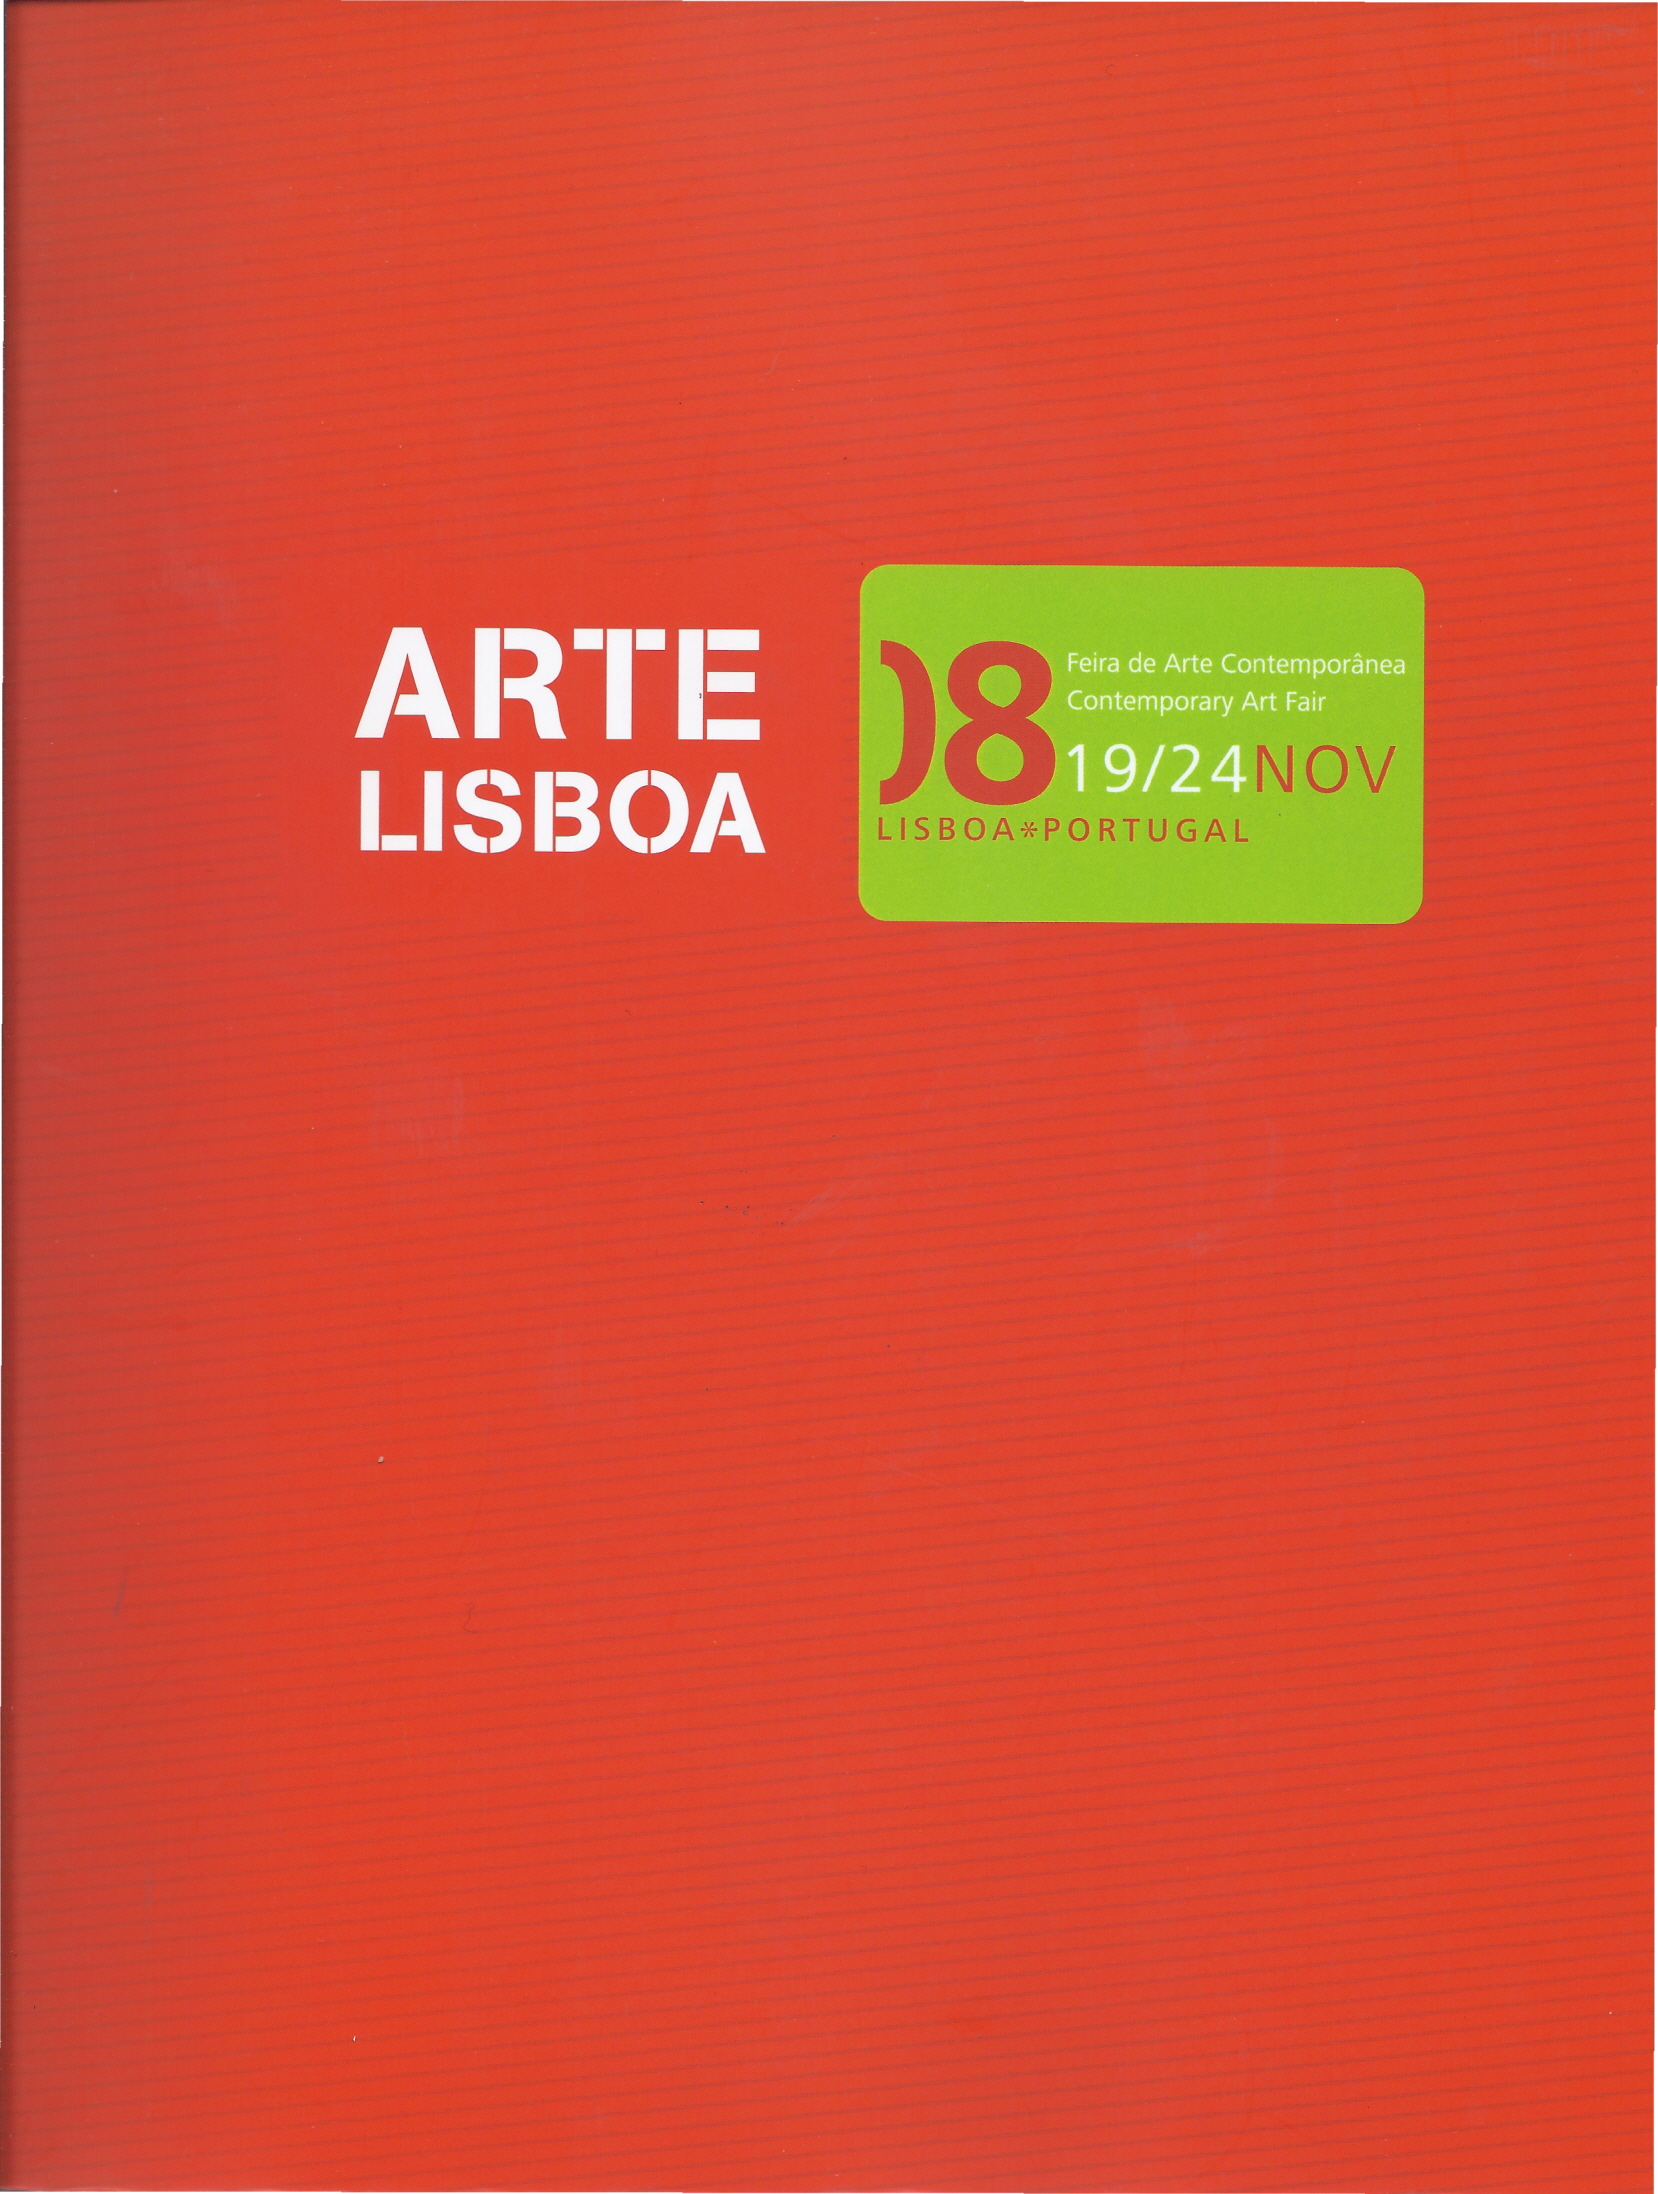 018 - ARTE LISBOA 2008 COMPLETO_Page_1